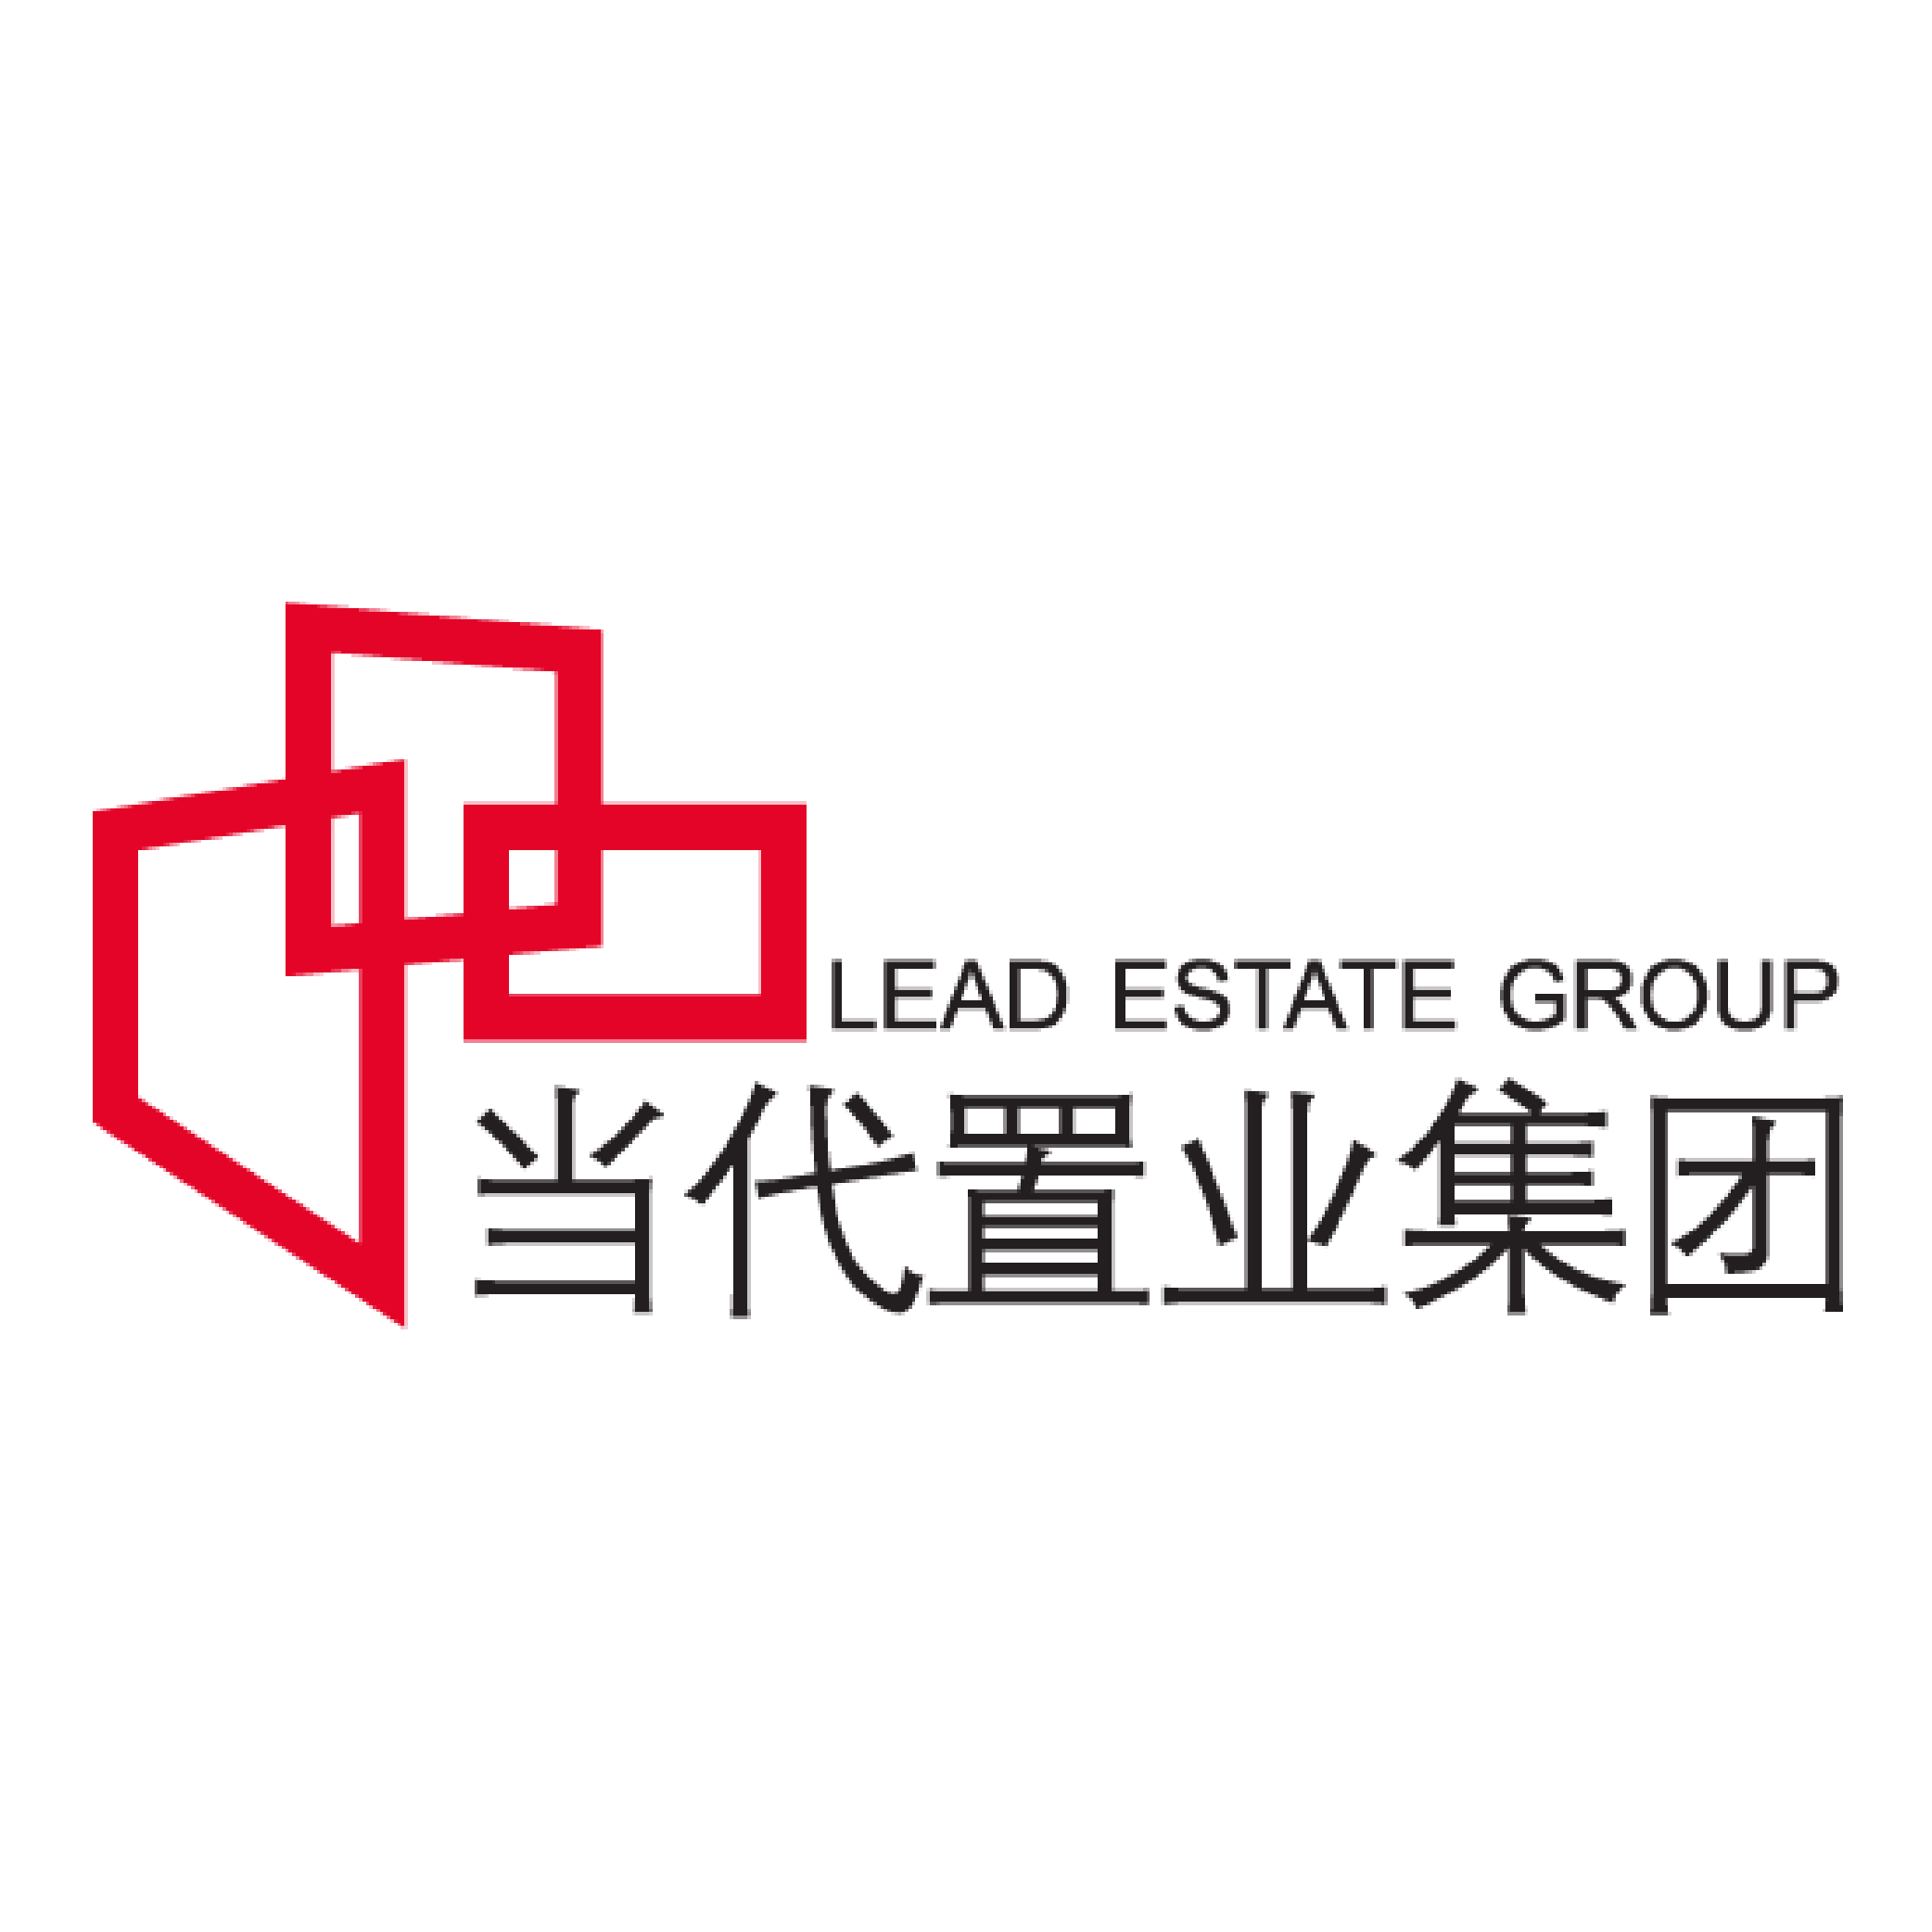 LEAD estate group logo